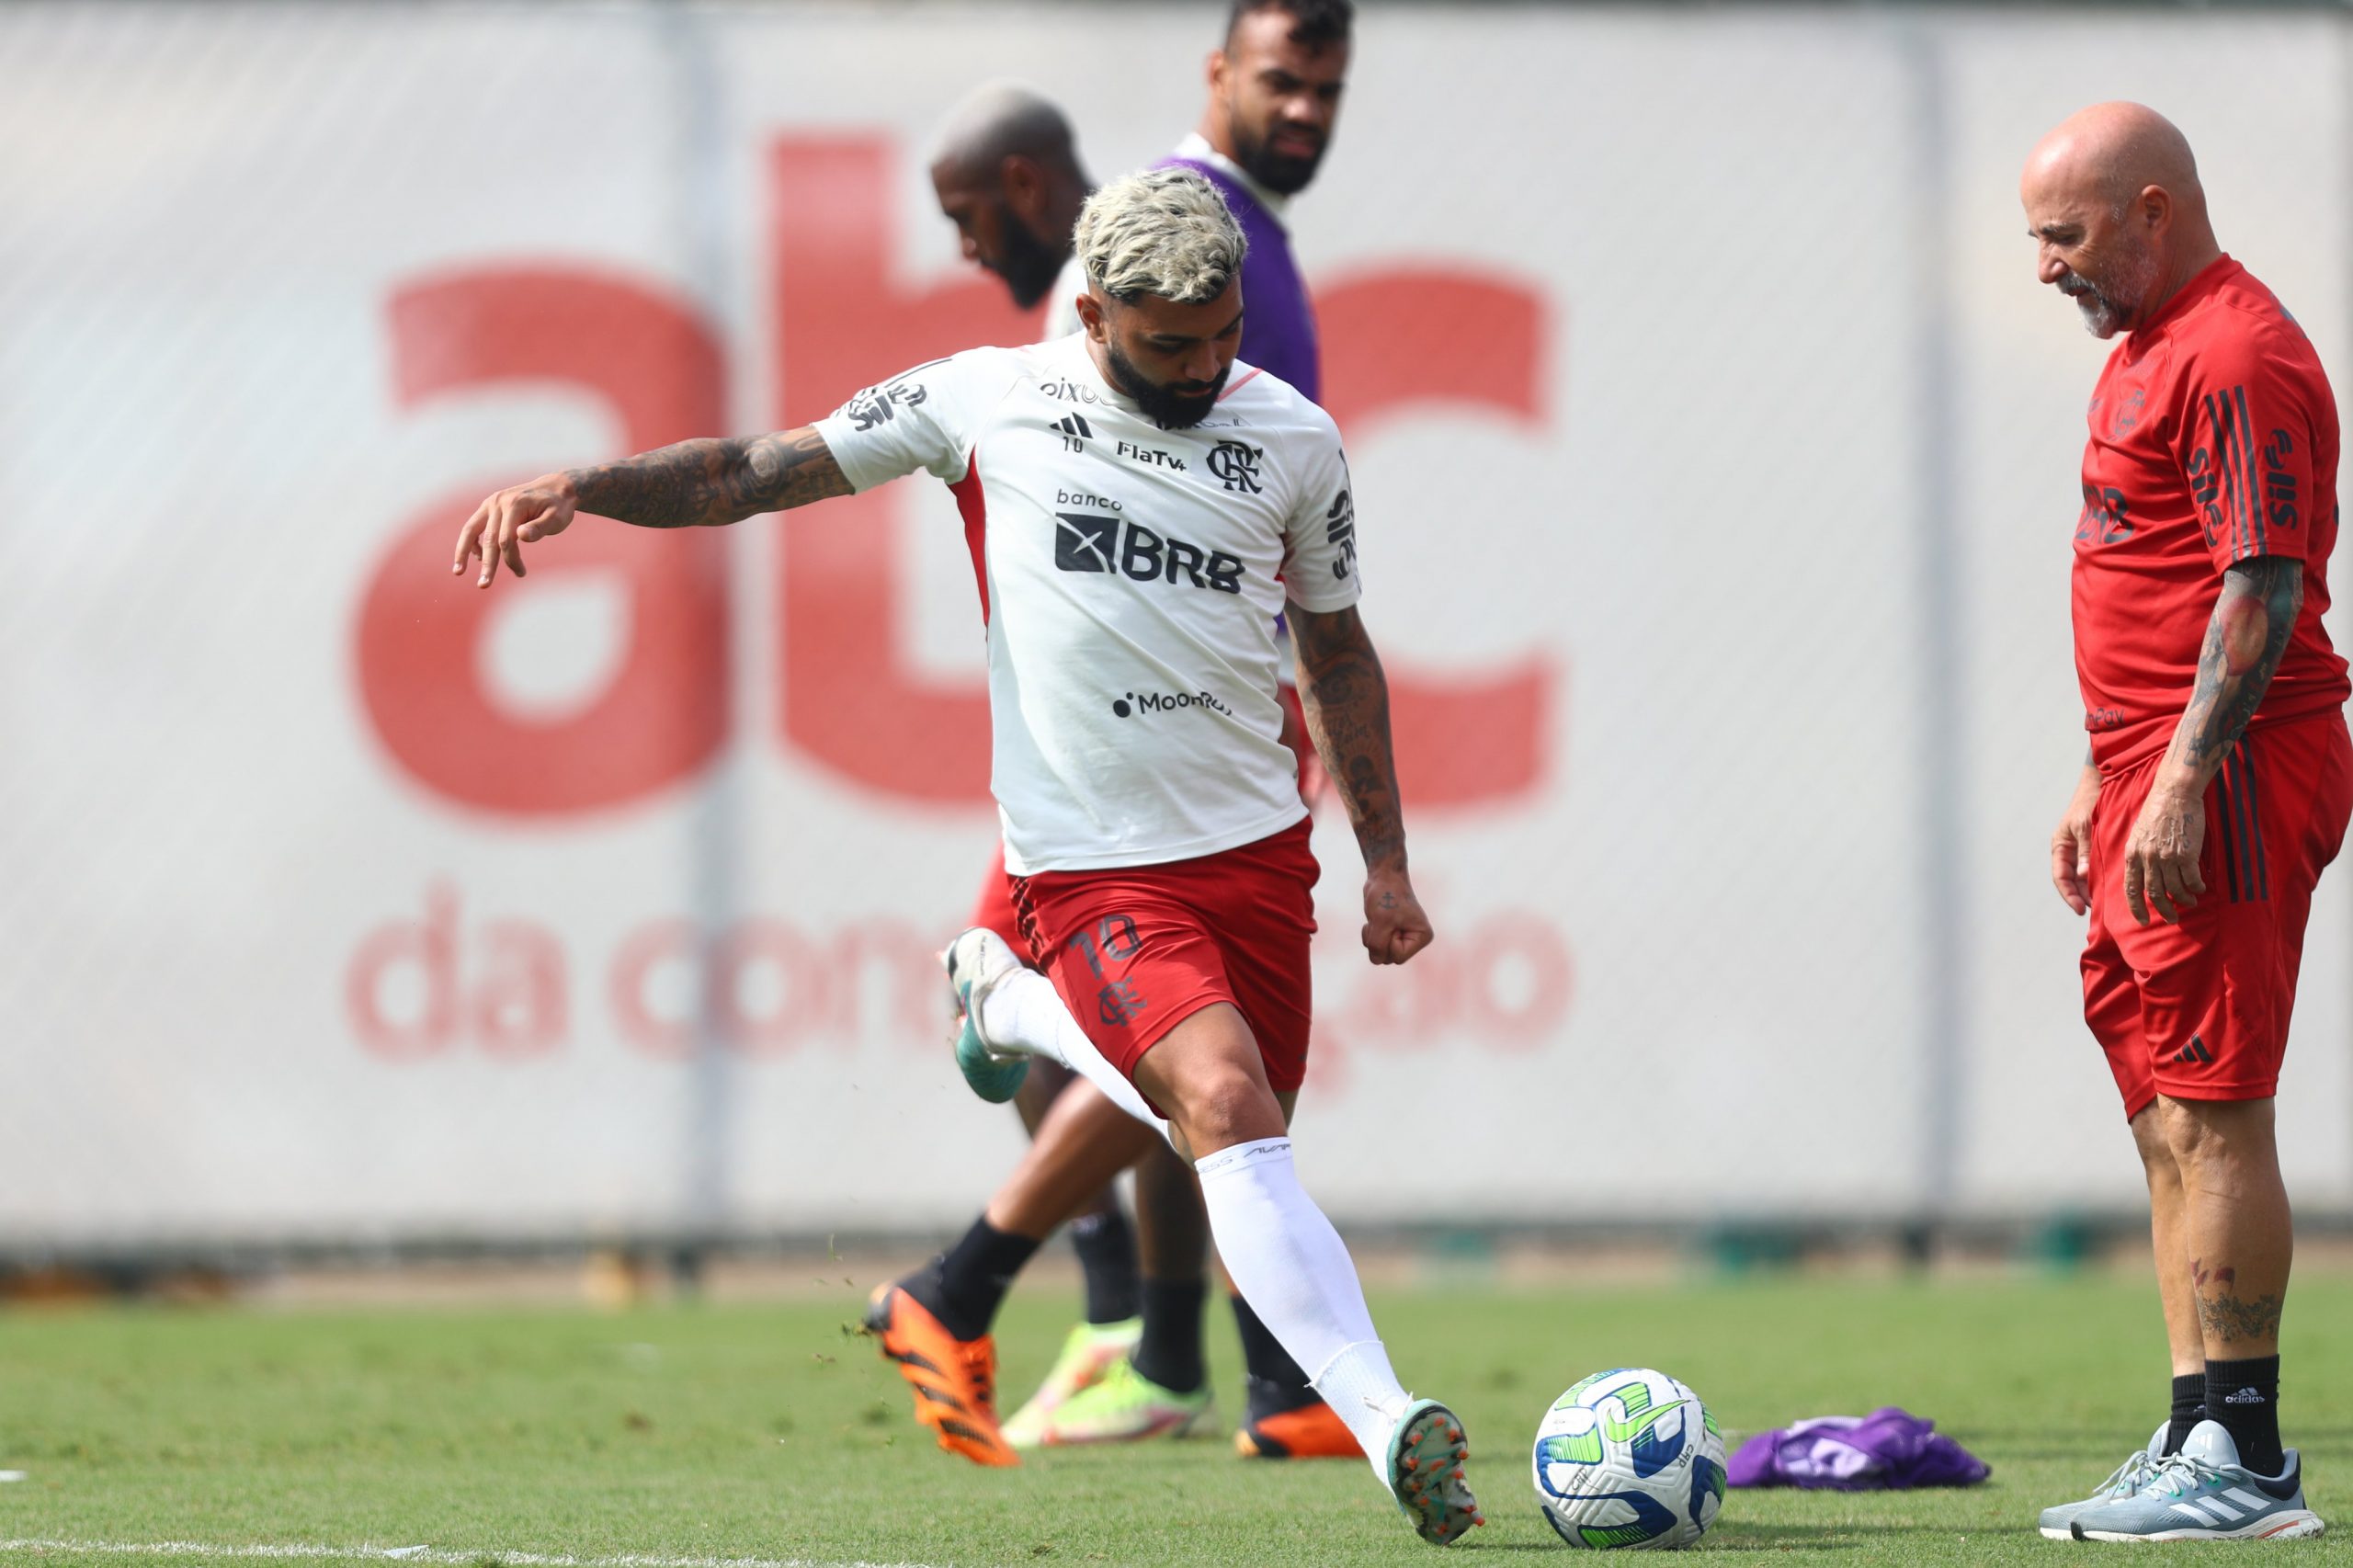 Próximos jogos do Flamengo: Fluminense, Bragantino e América-MG